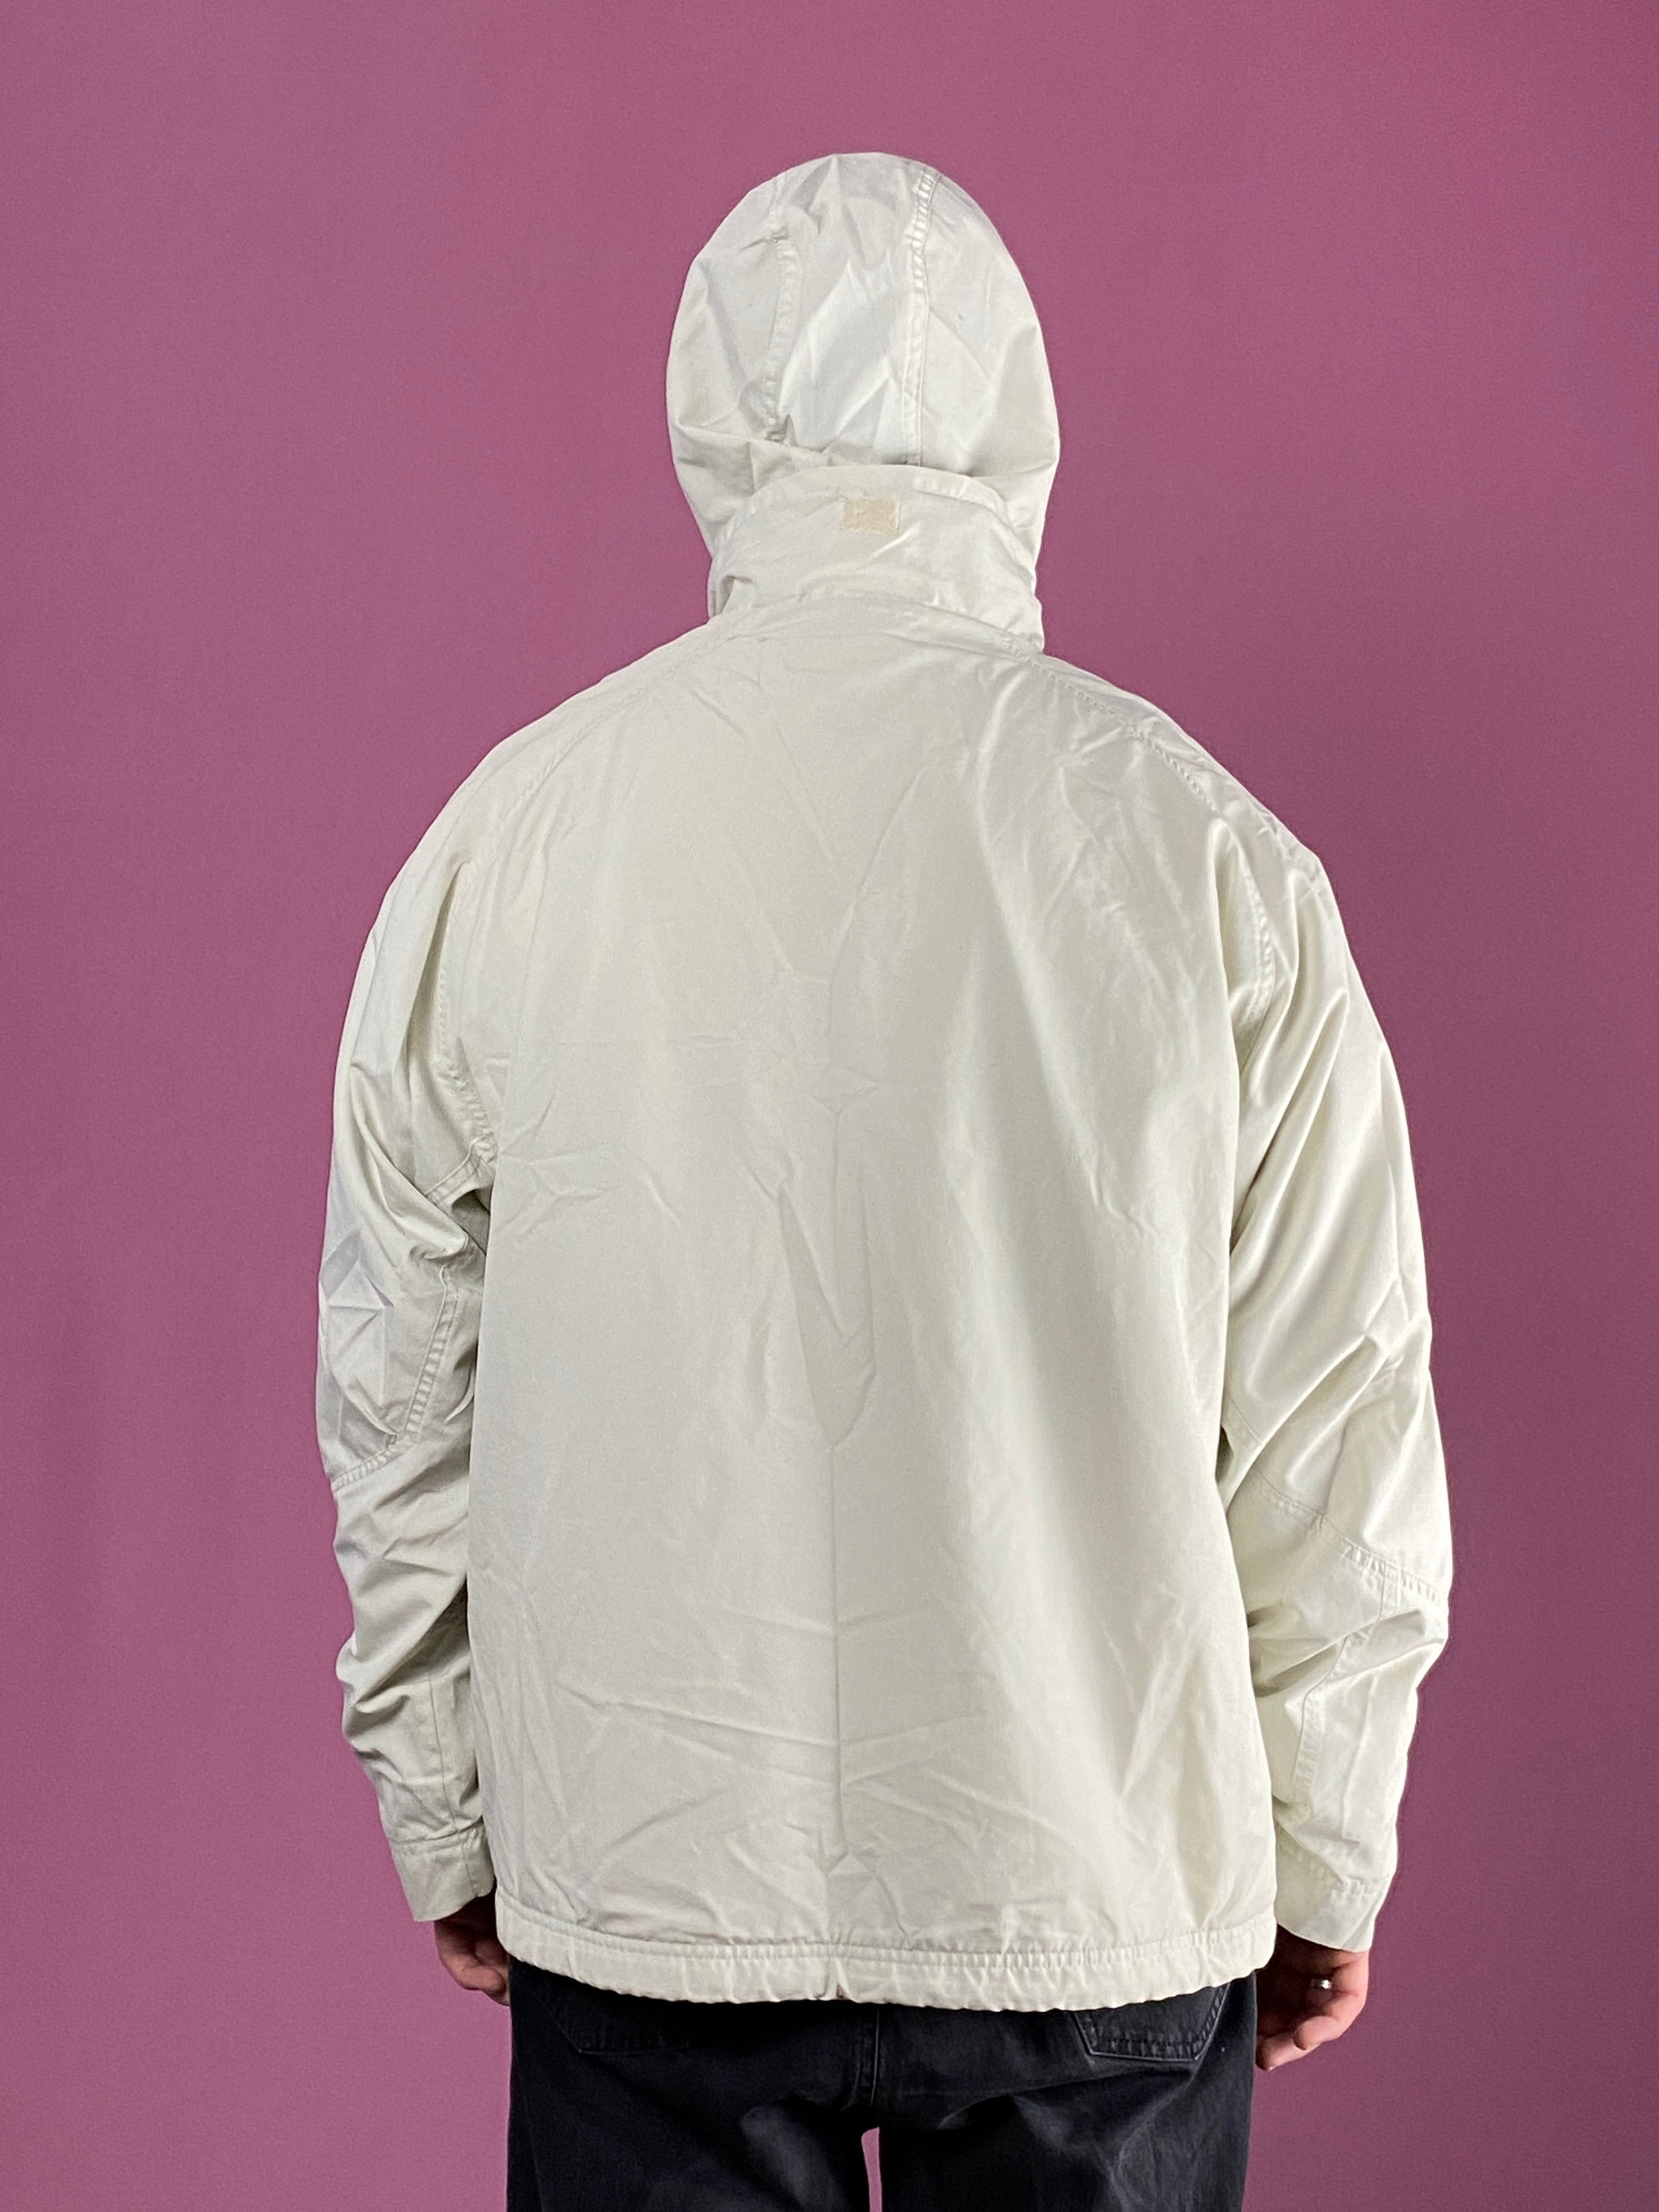 90s Adidas Vintage Men's Windbreaker Jacket - Medium White Polyester